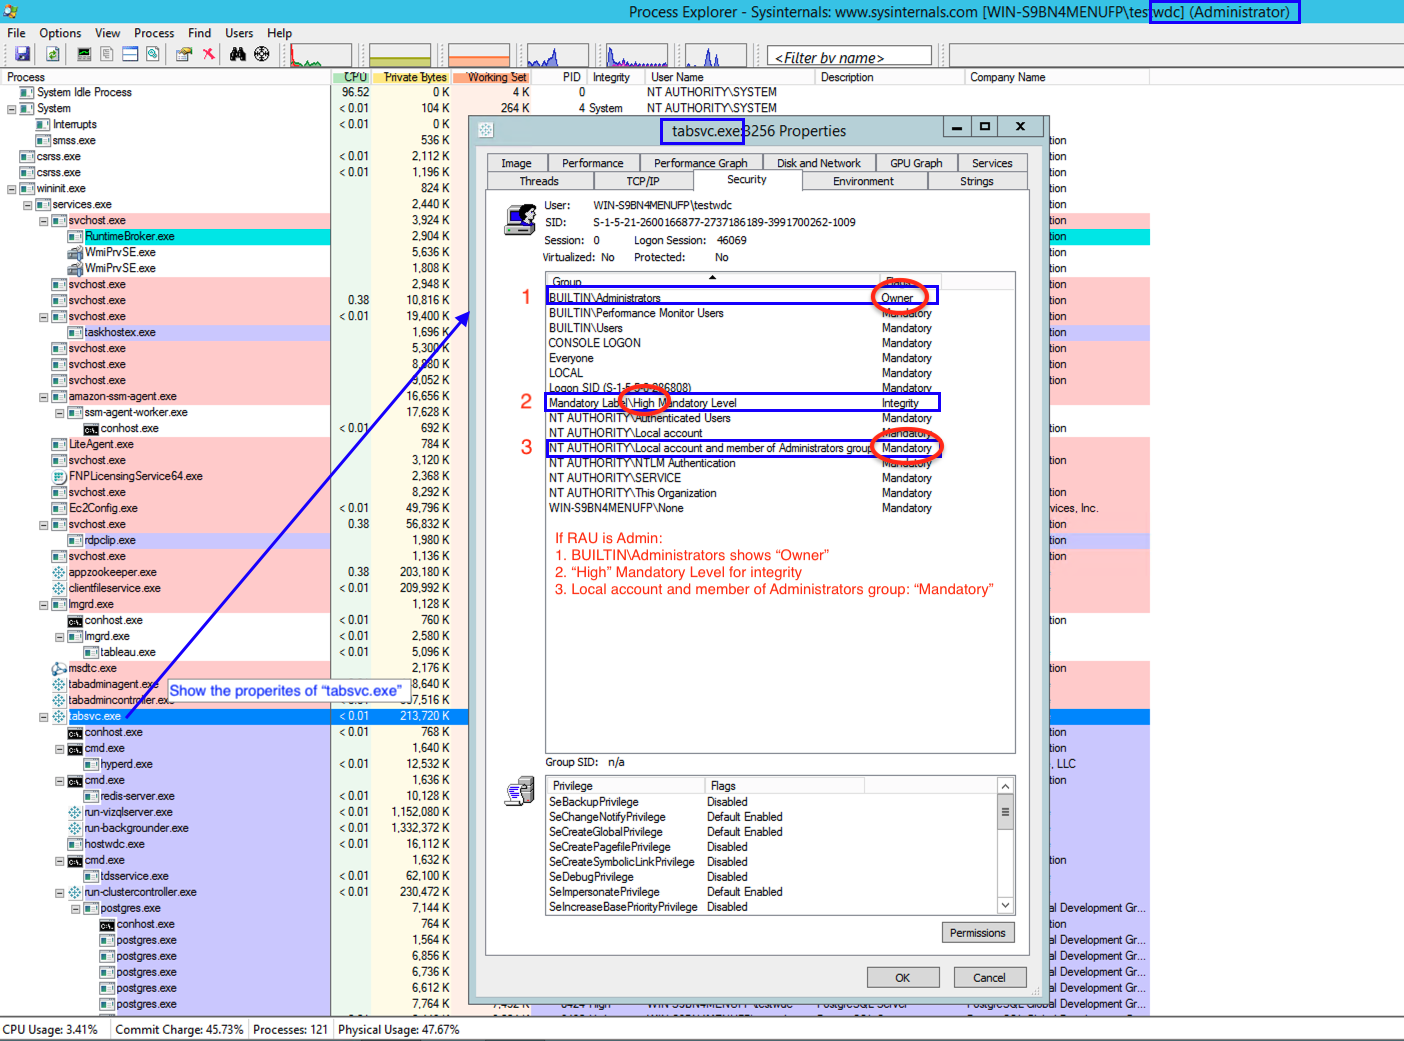 Screenshot of Windows Process Explorer showing relevant entries